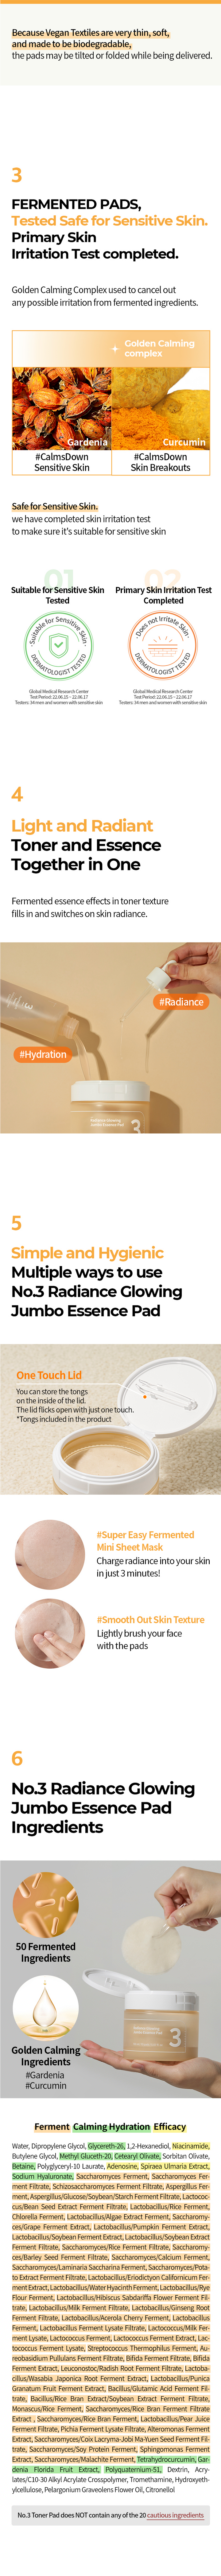 Numbuzin No.3 Radiance Glowing Jumbo Essence Pad 70ea